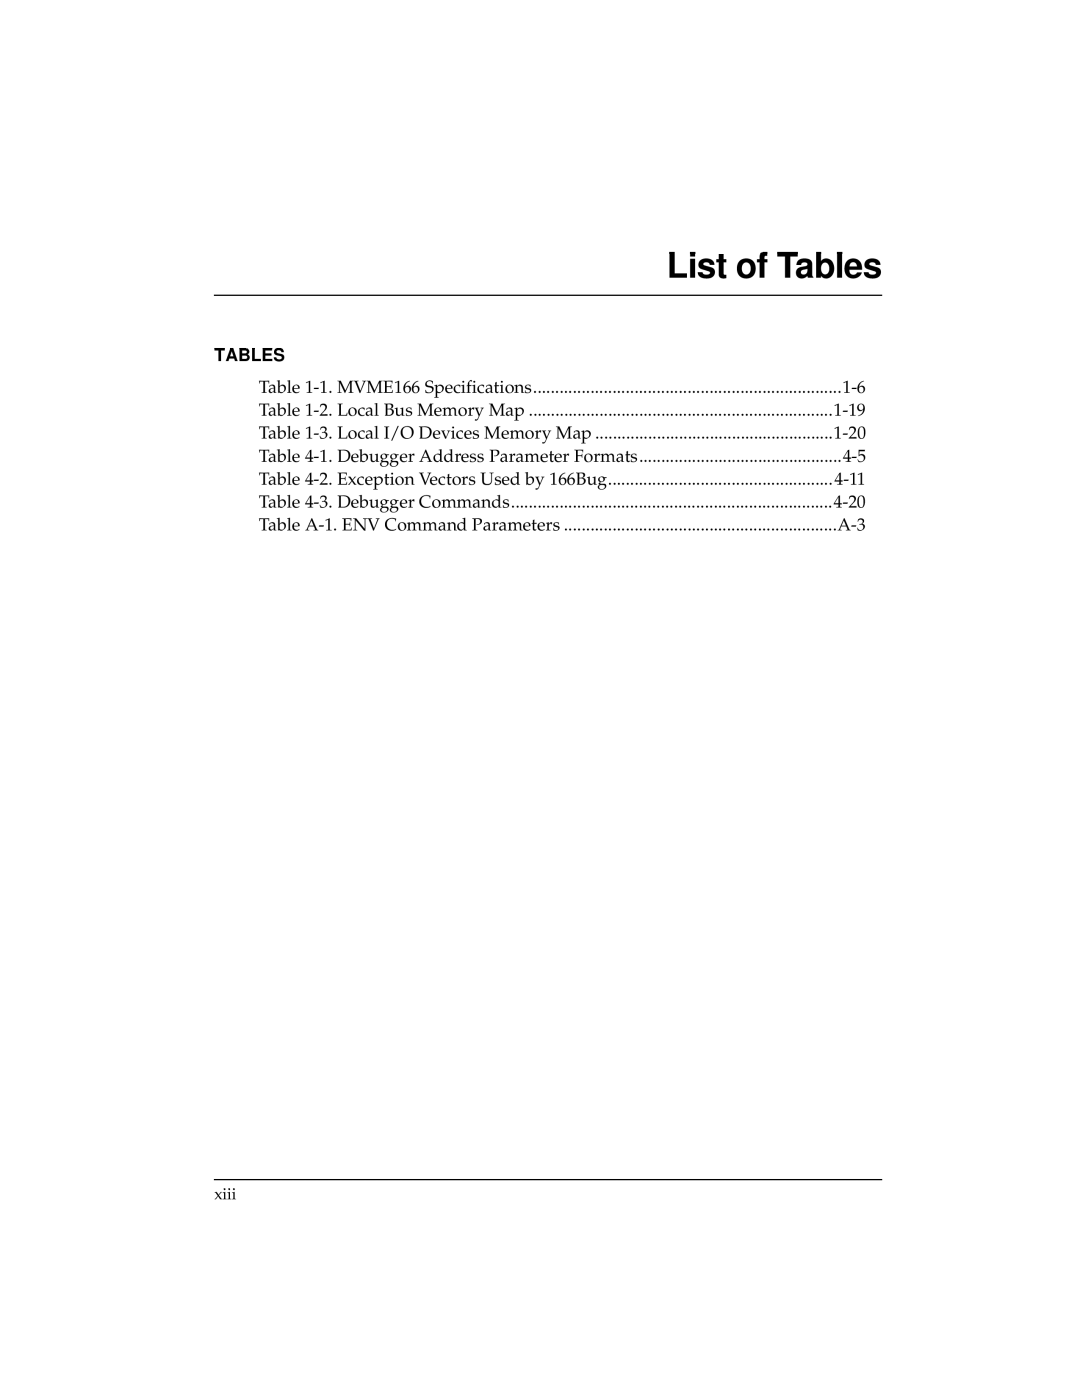 Motorola MVME166D2, MVME166IG/D2 manual List of Tables 